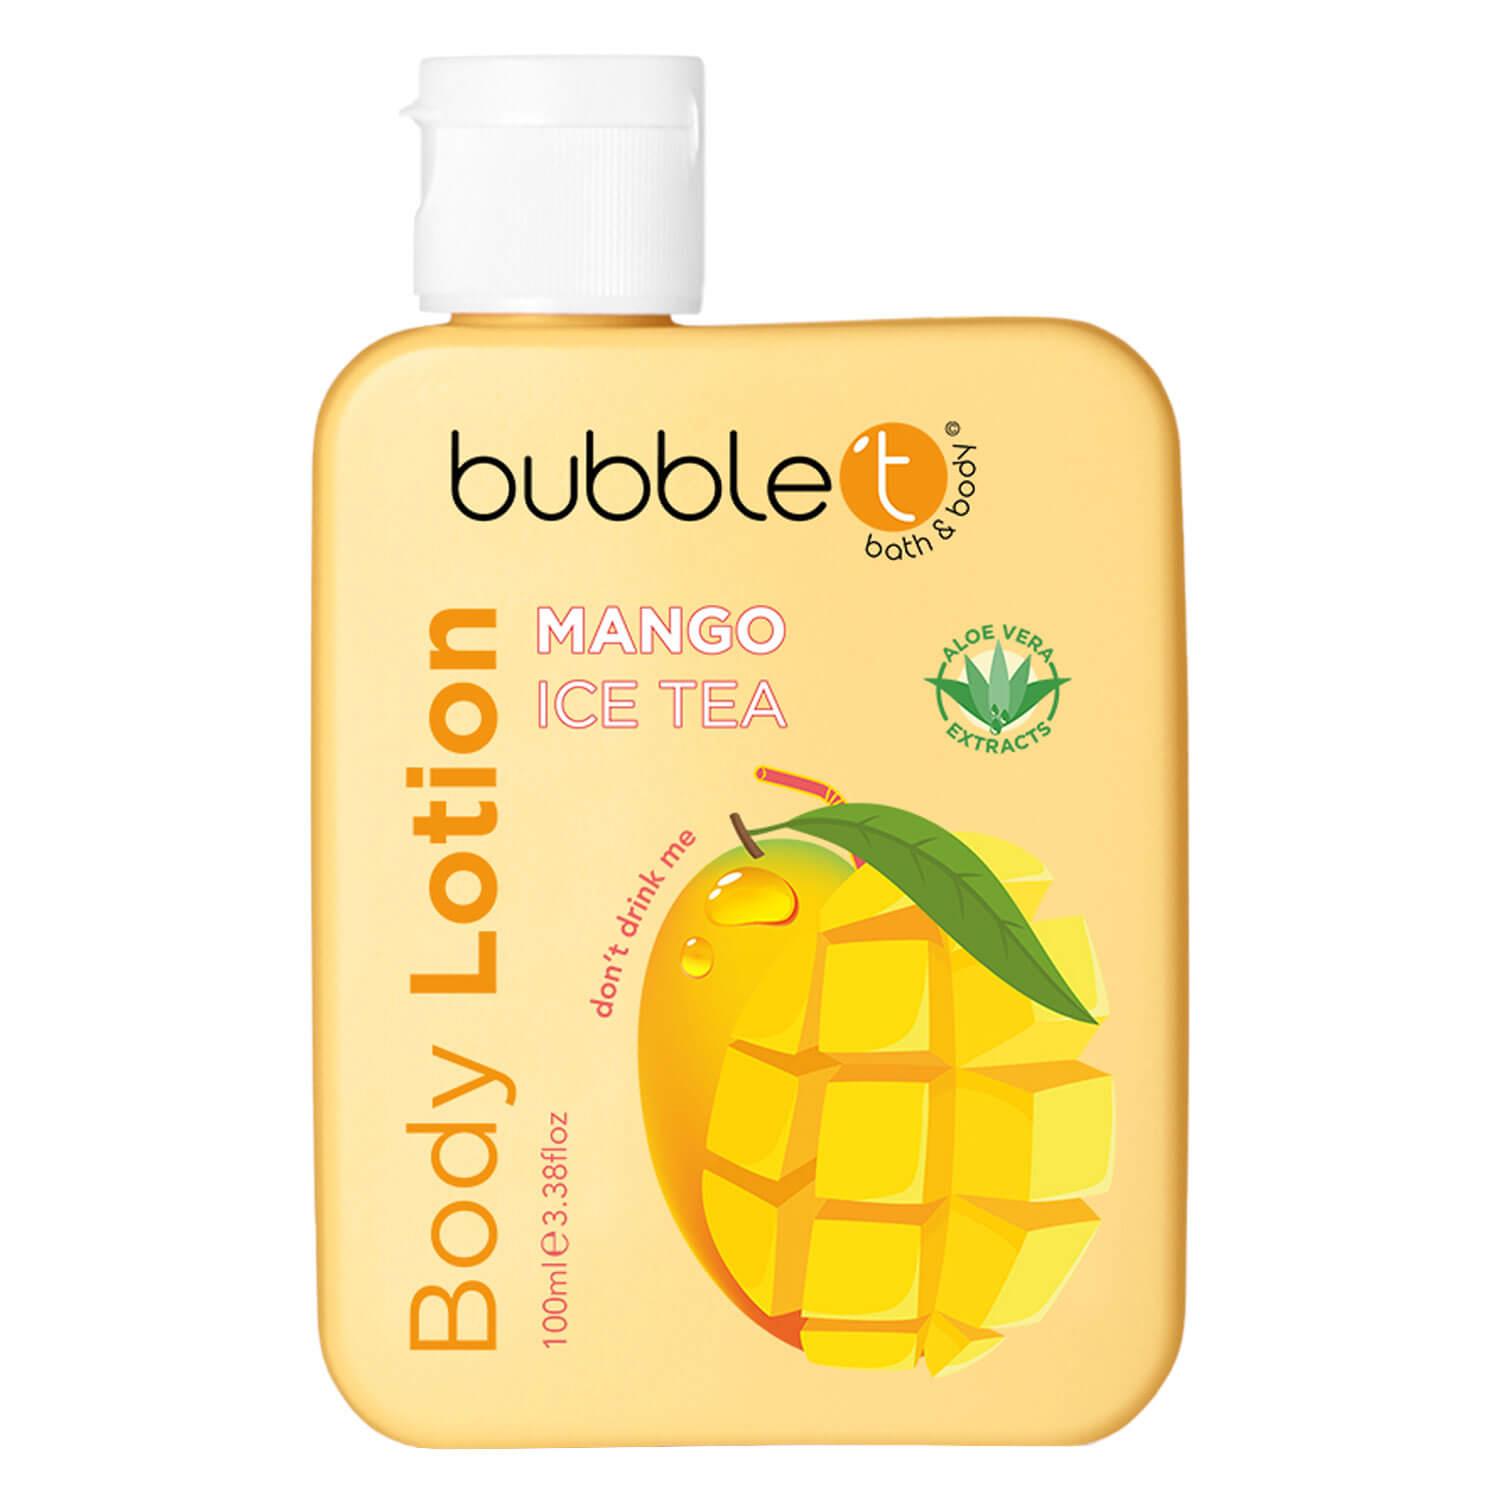 bubble t - Mango Ice Tea Body Lotion